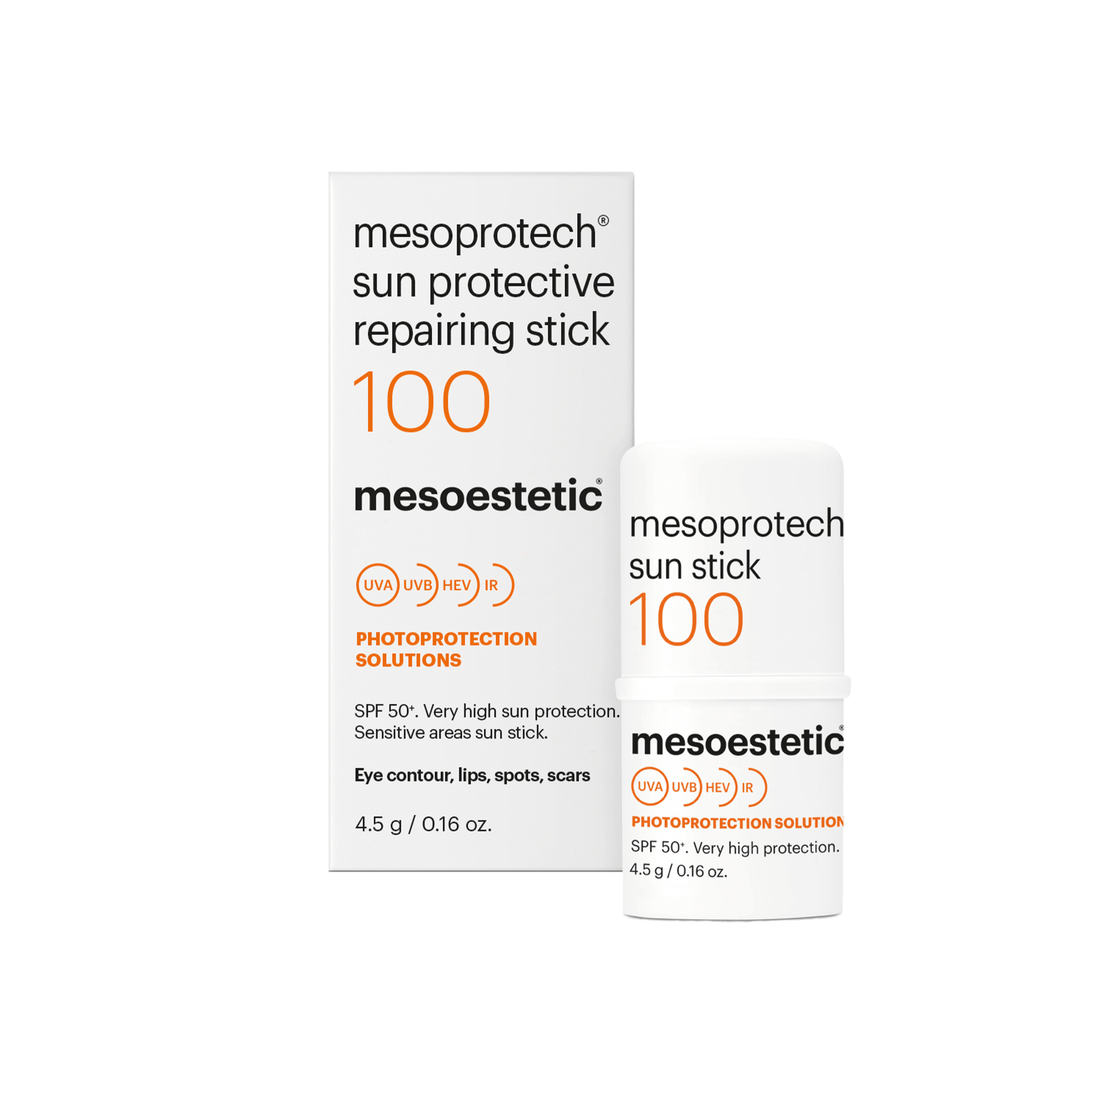 mesoprotech® sun protective repairing stick 100